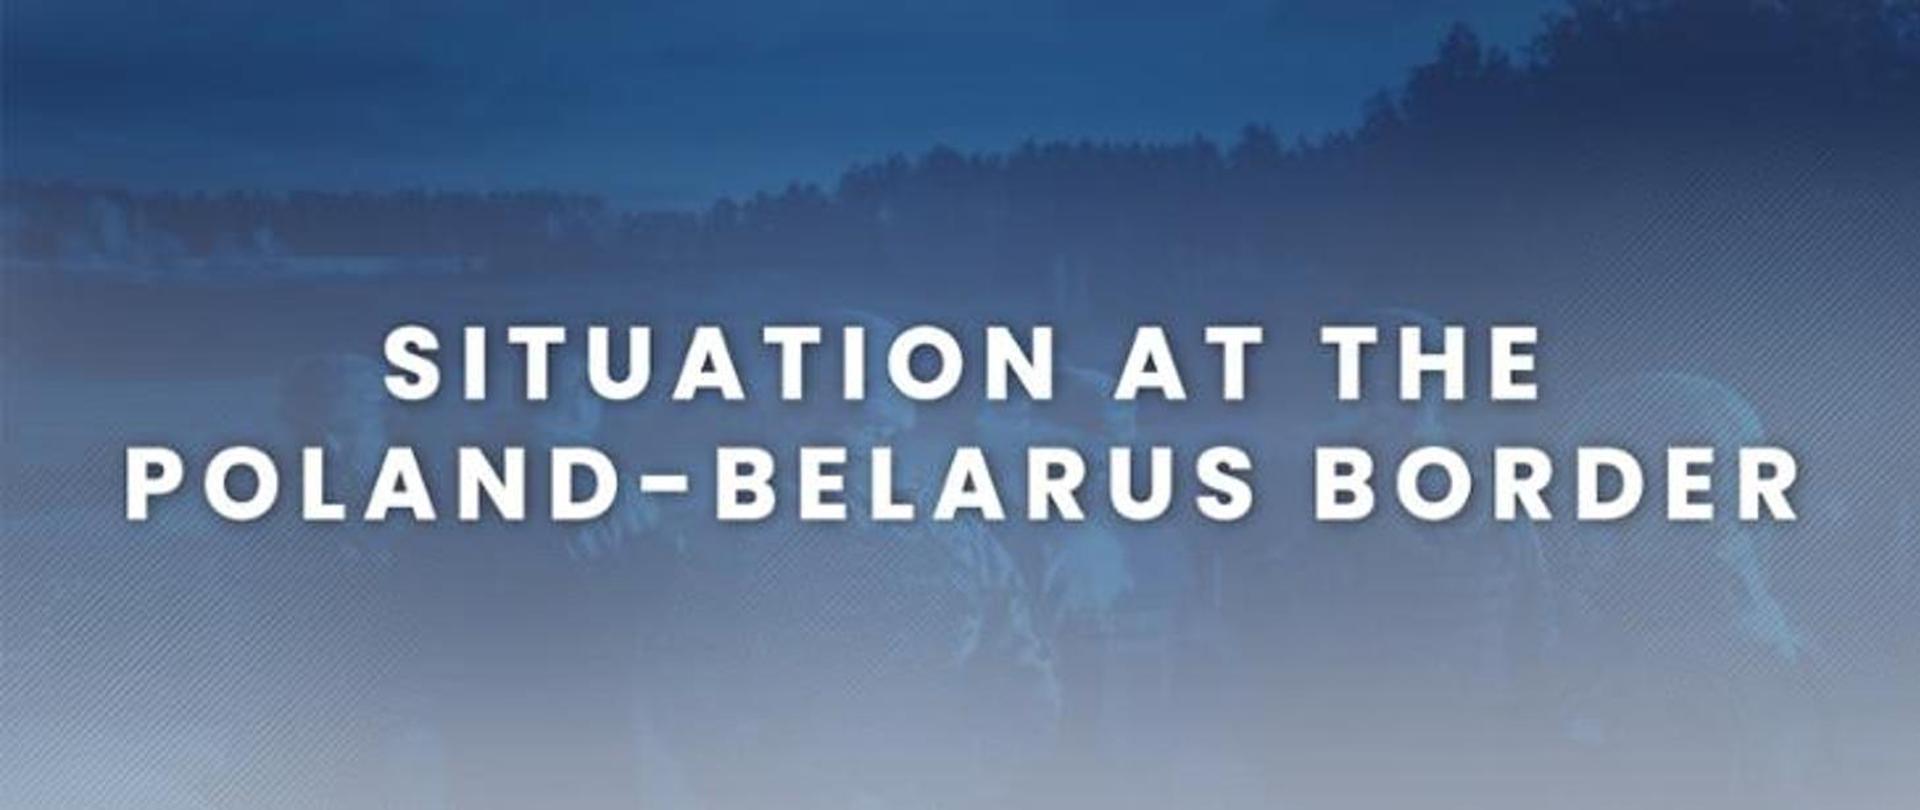 Situation at the Poland-Belarus border_baner